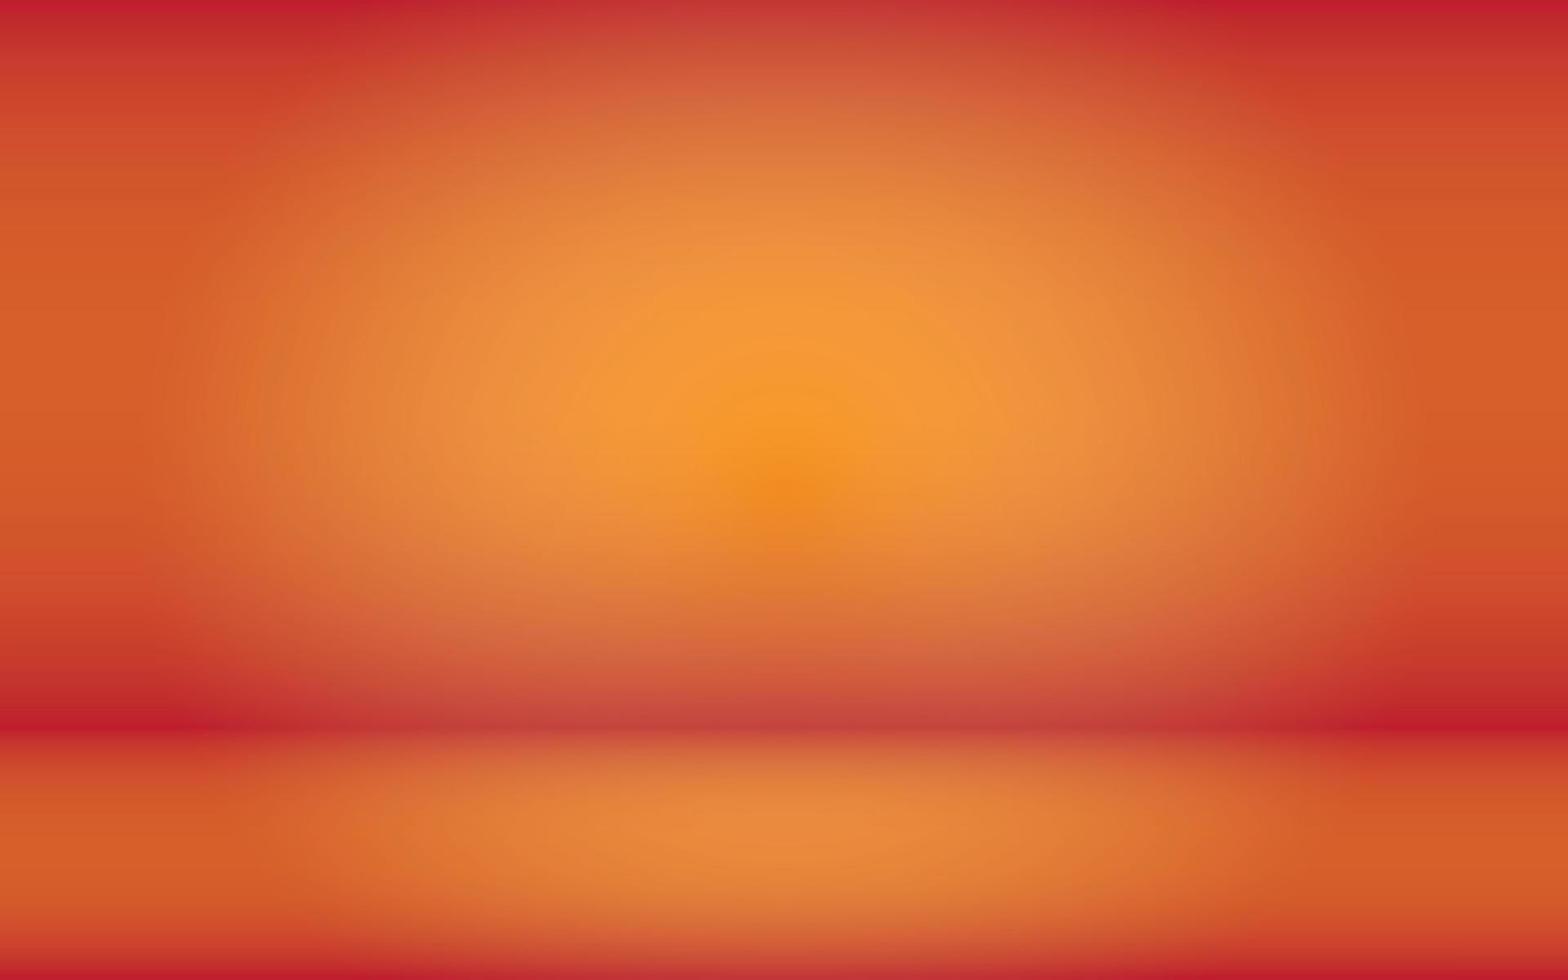 gradient orange background empty space studio room for display ad product website template wallpaper studio vector illustration,